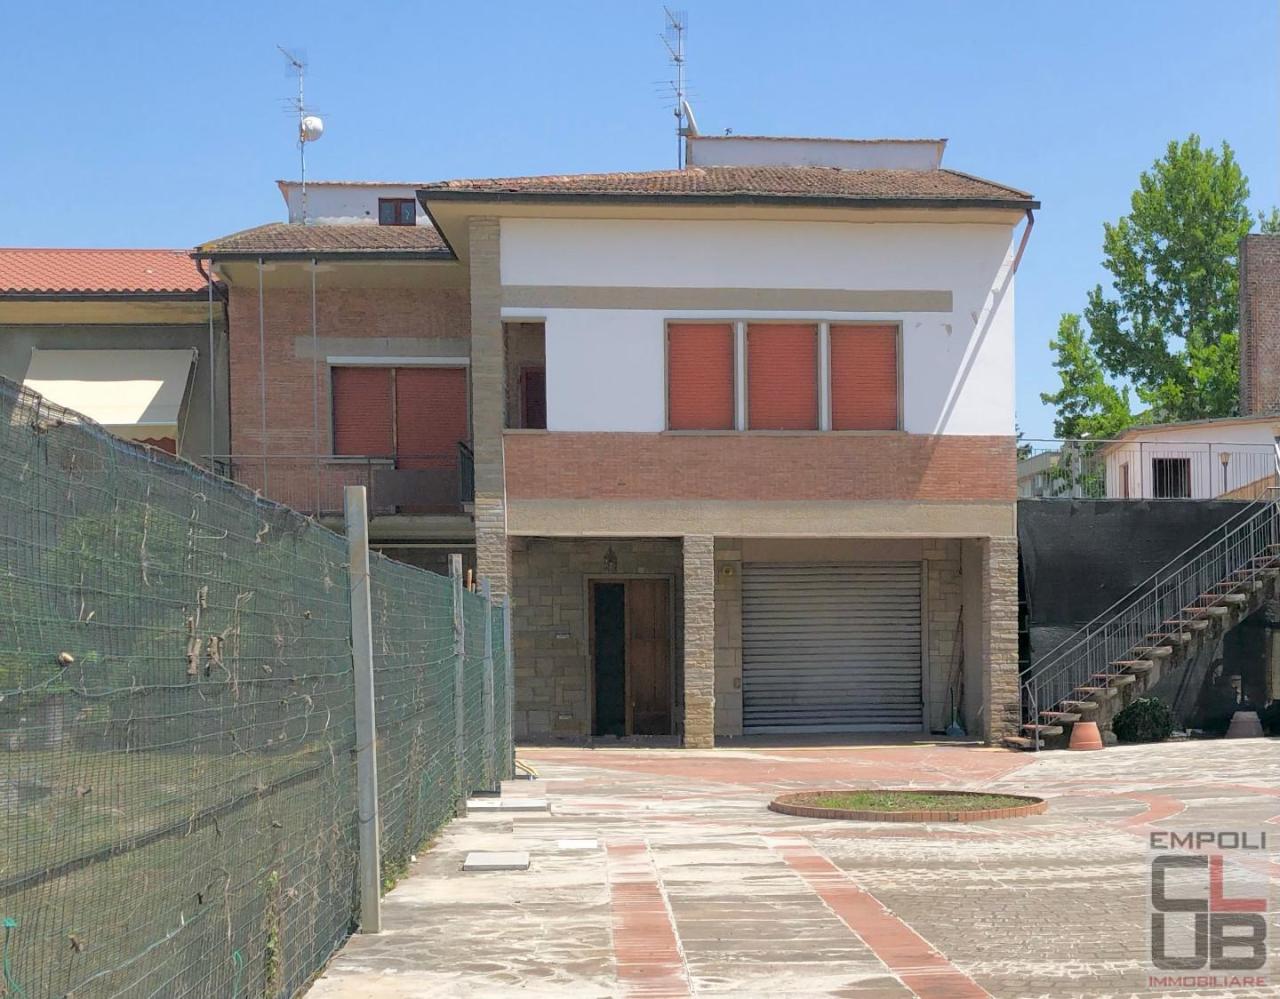 Vendita Villa, Empoli foto